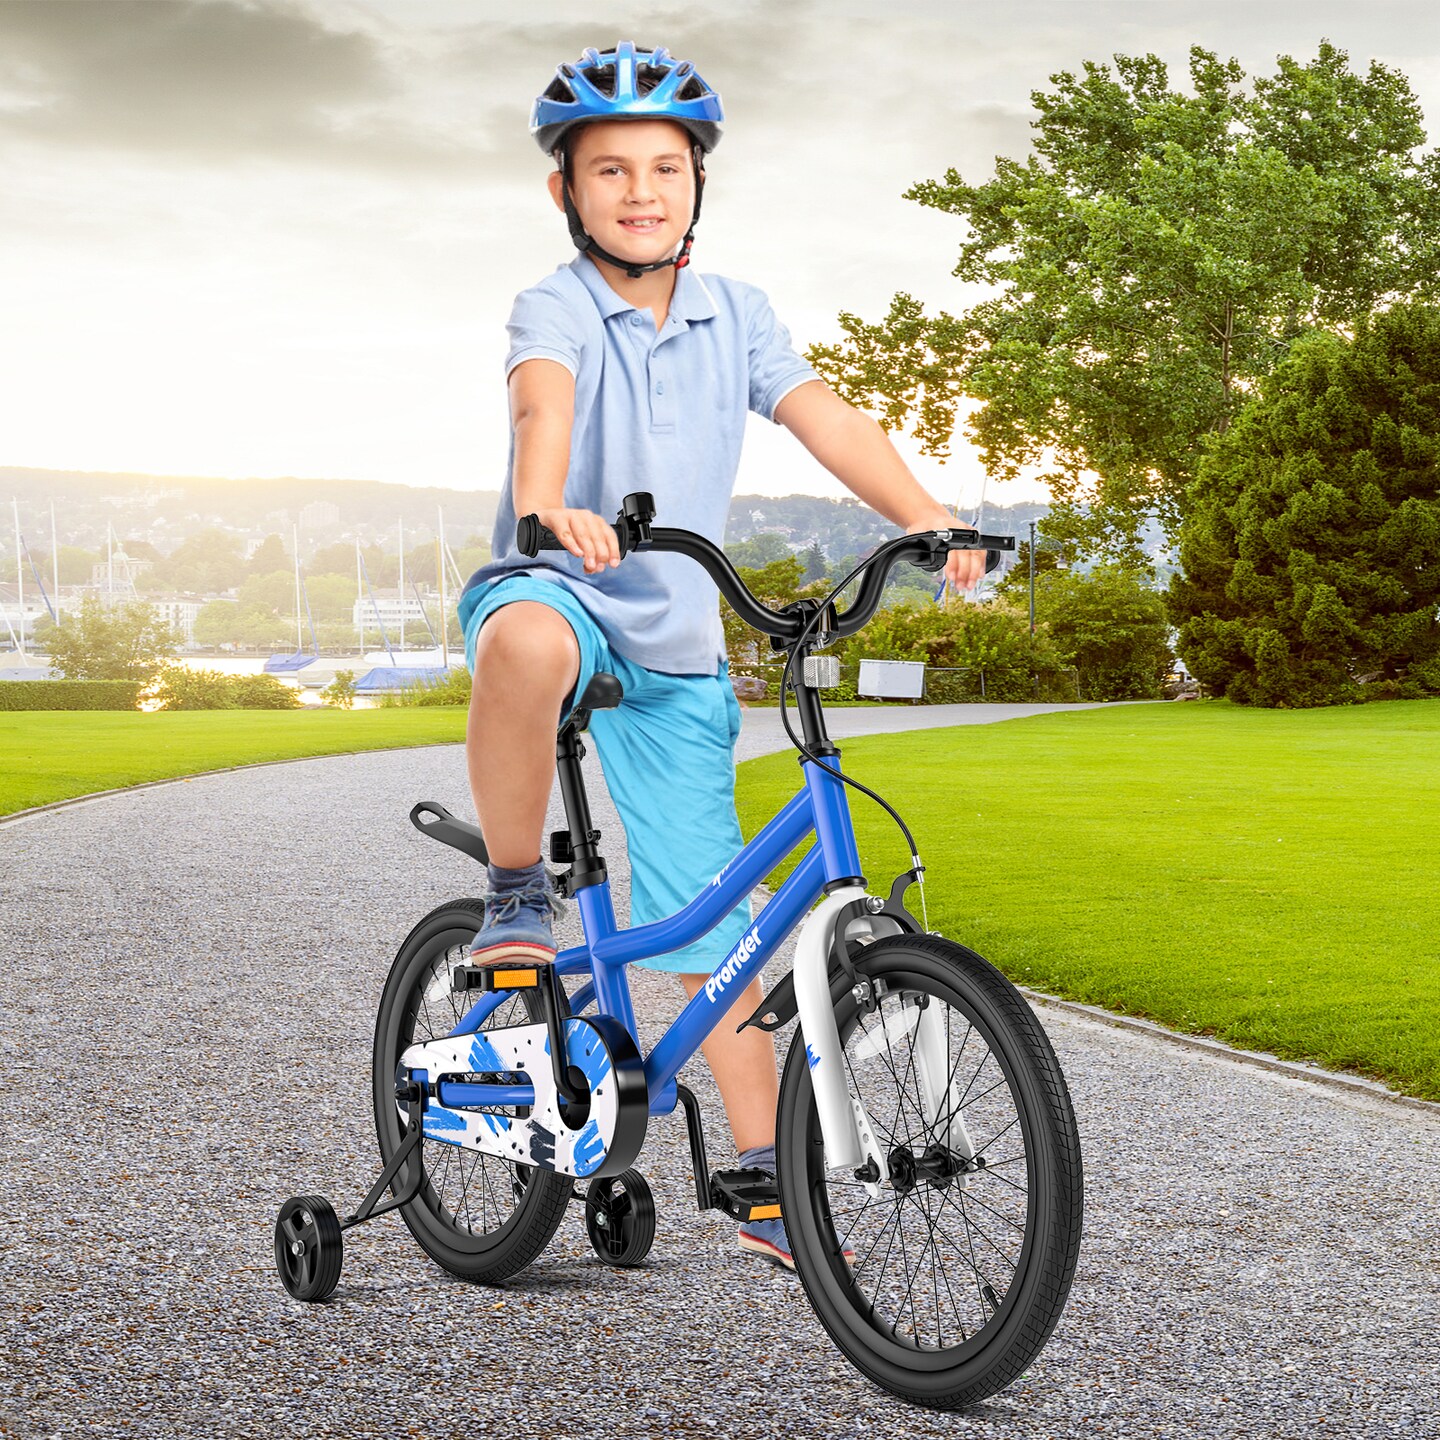 18 Feet Kid's Bike with Removable Training Wheels